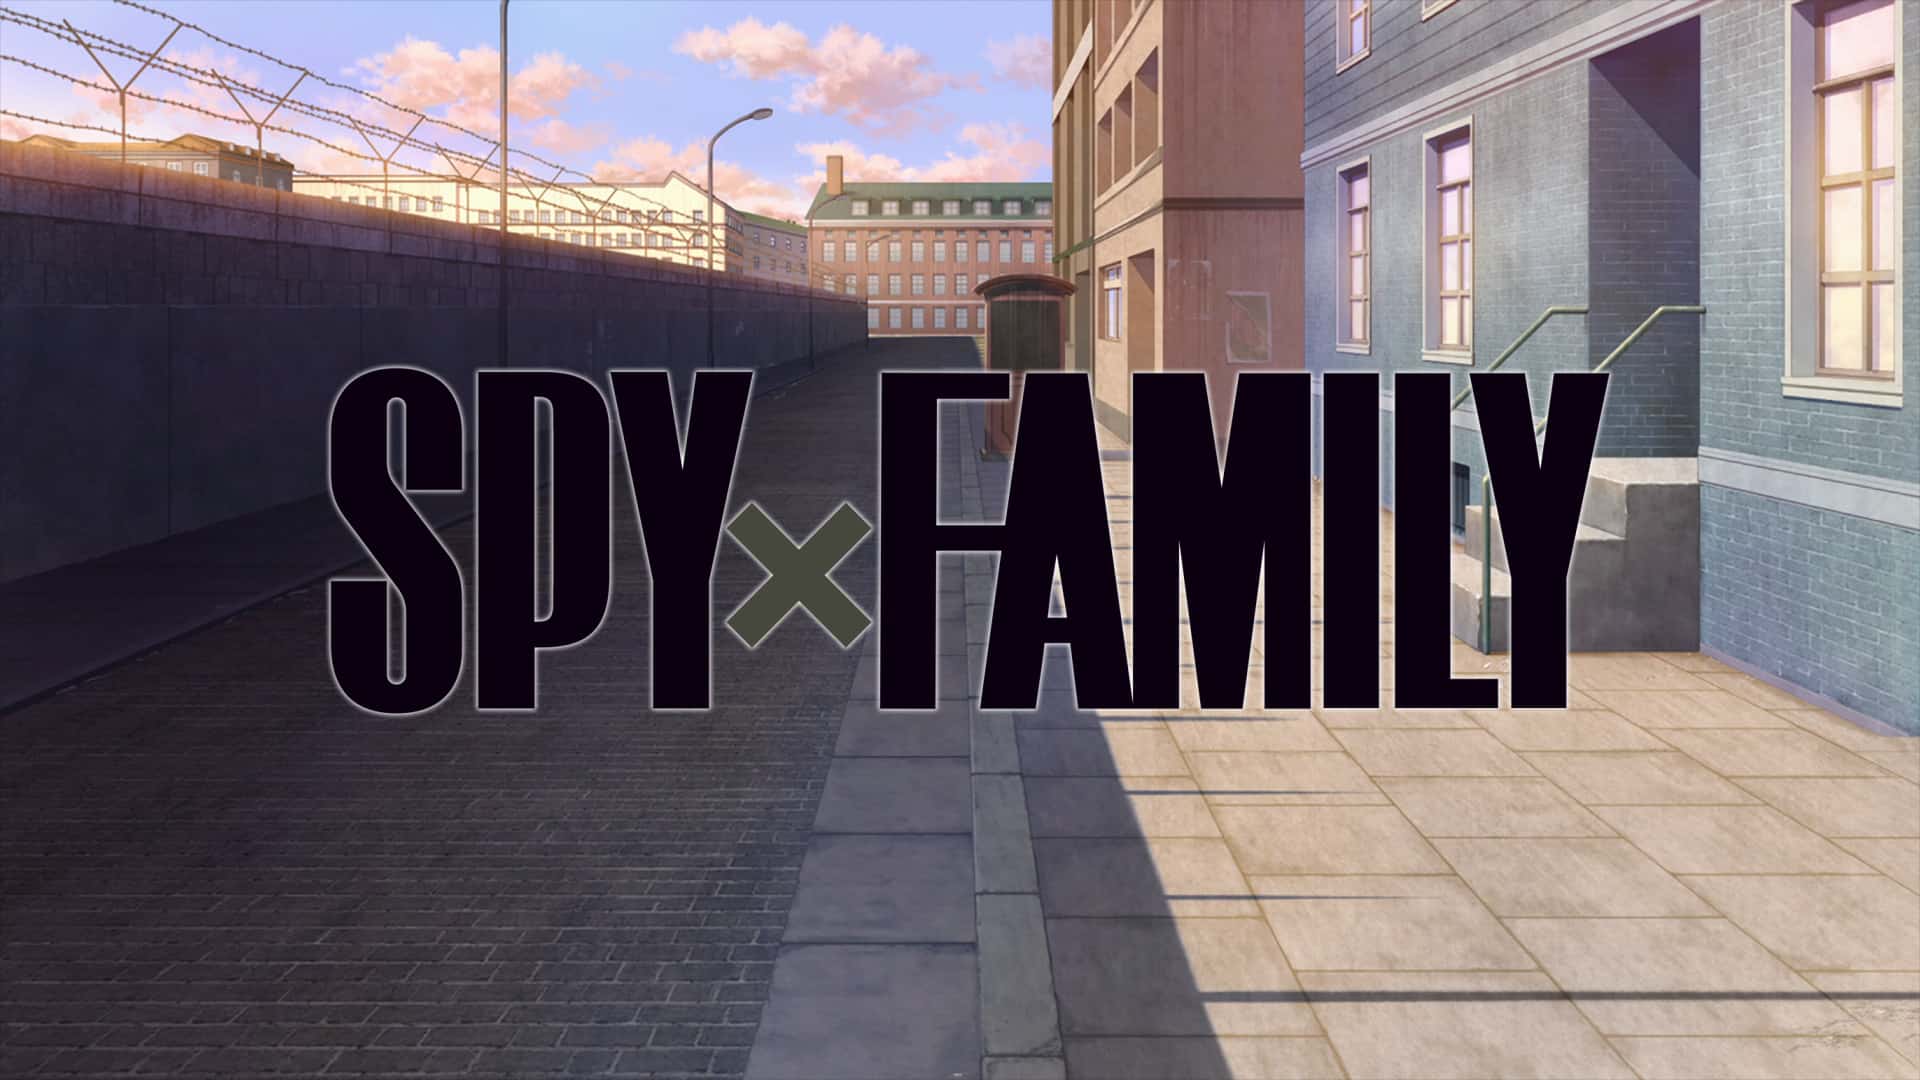 Title Card - Spy X Family Season 1 Episode 1 “Mission 1 Operation Strix”